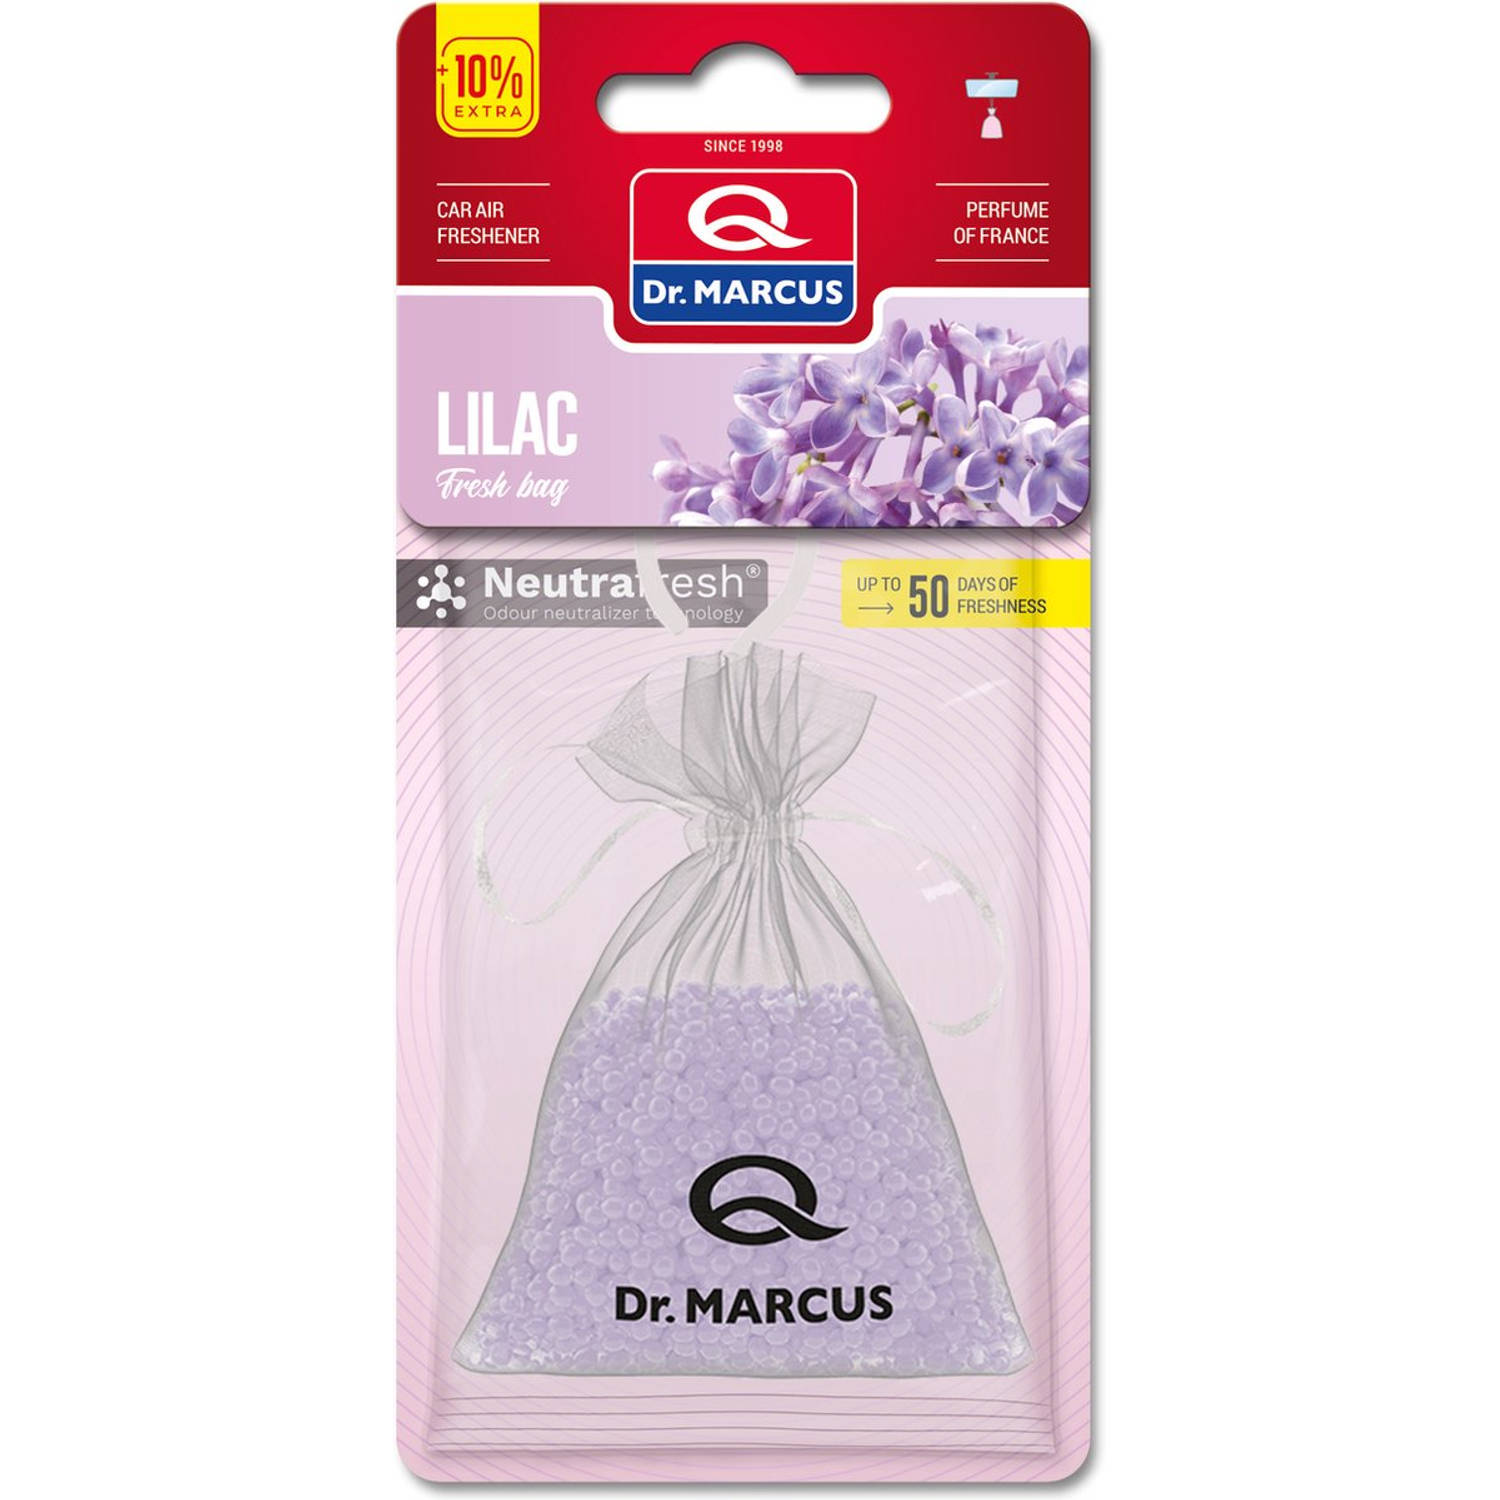 Dr. Marcus Fresh bag - Autogeurtje - Car parfume - Lilac